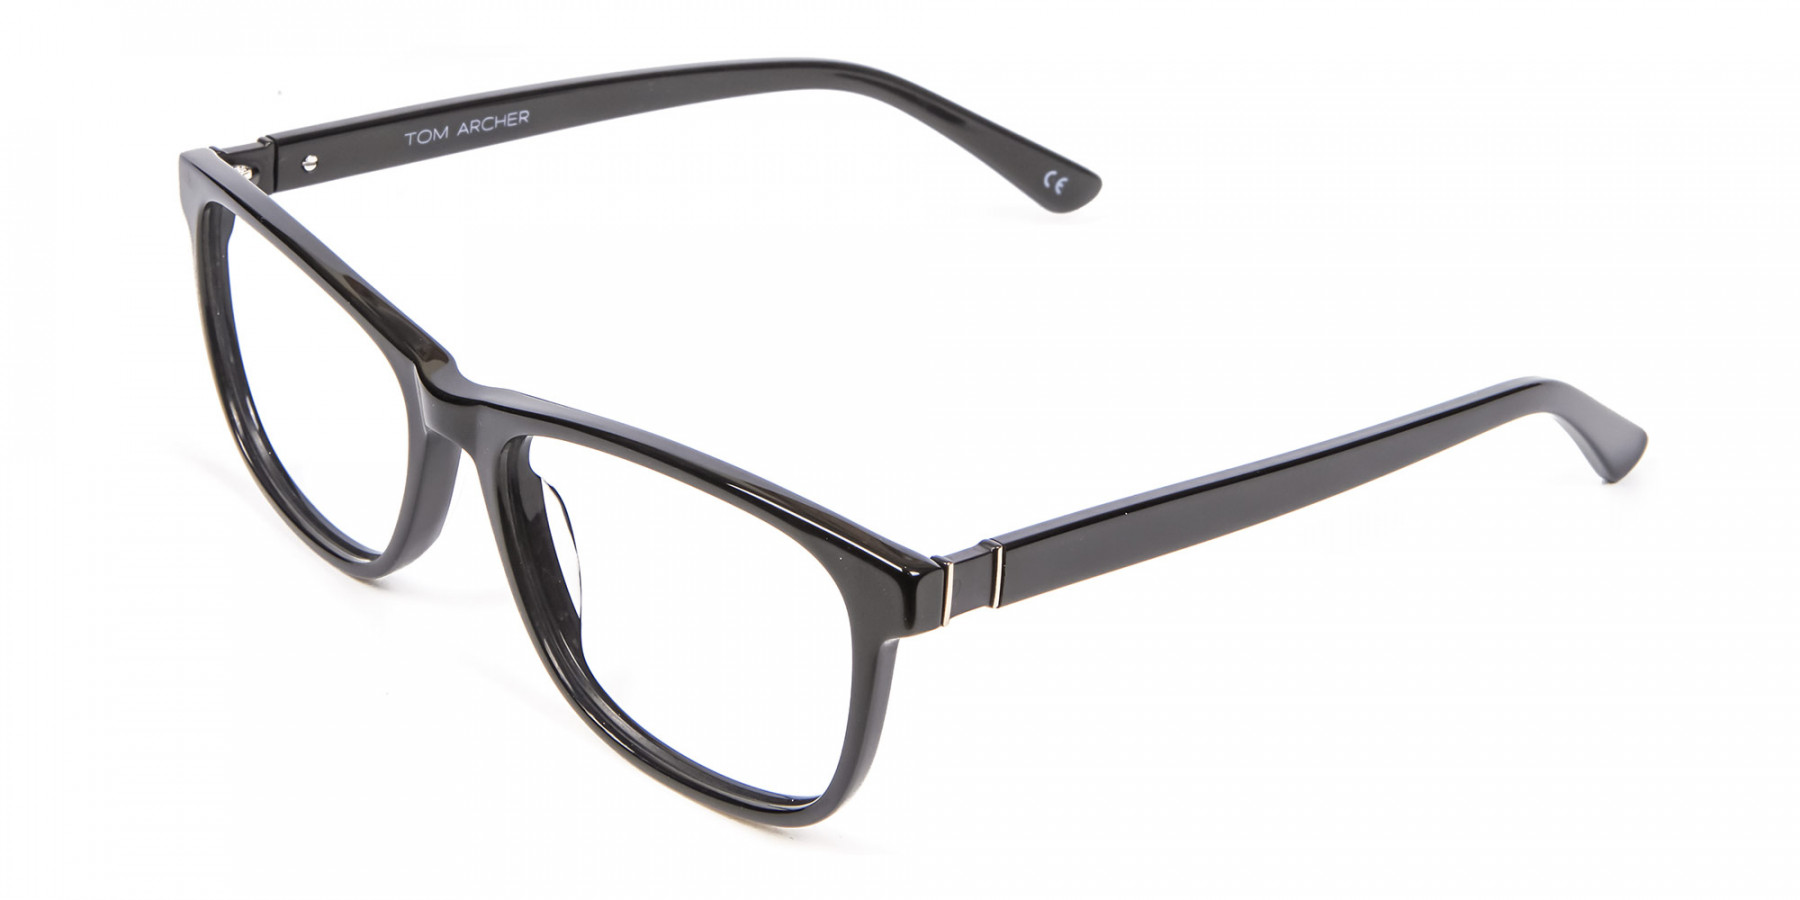 Black Simplicity Wayfarer Glasses